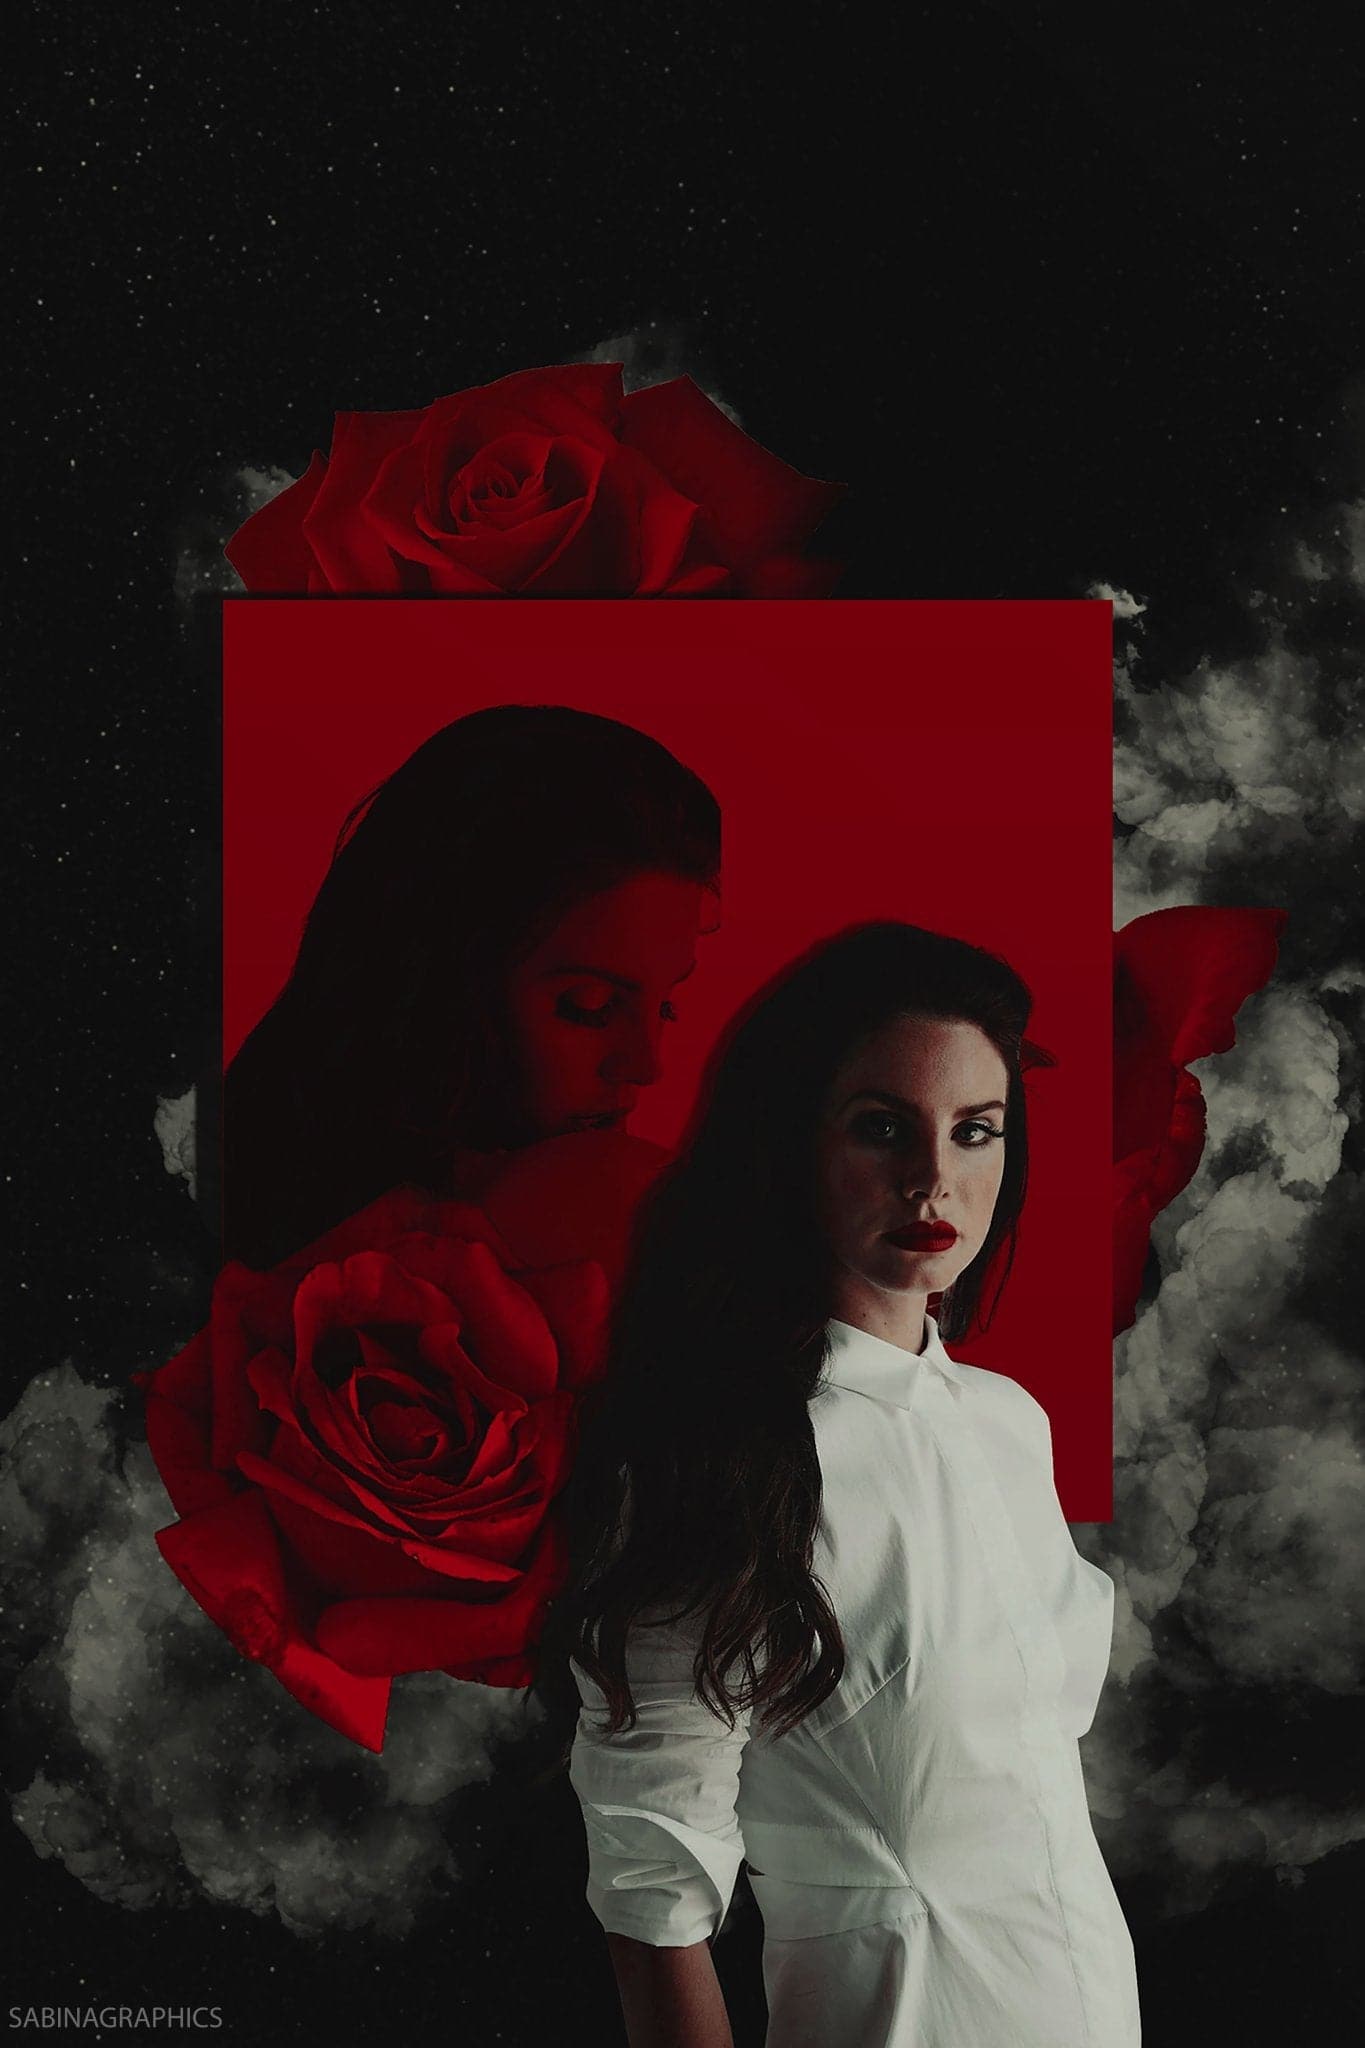 Lana Del Rey 'Red Rose' Poster - Posters Plug